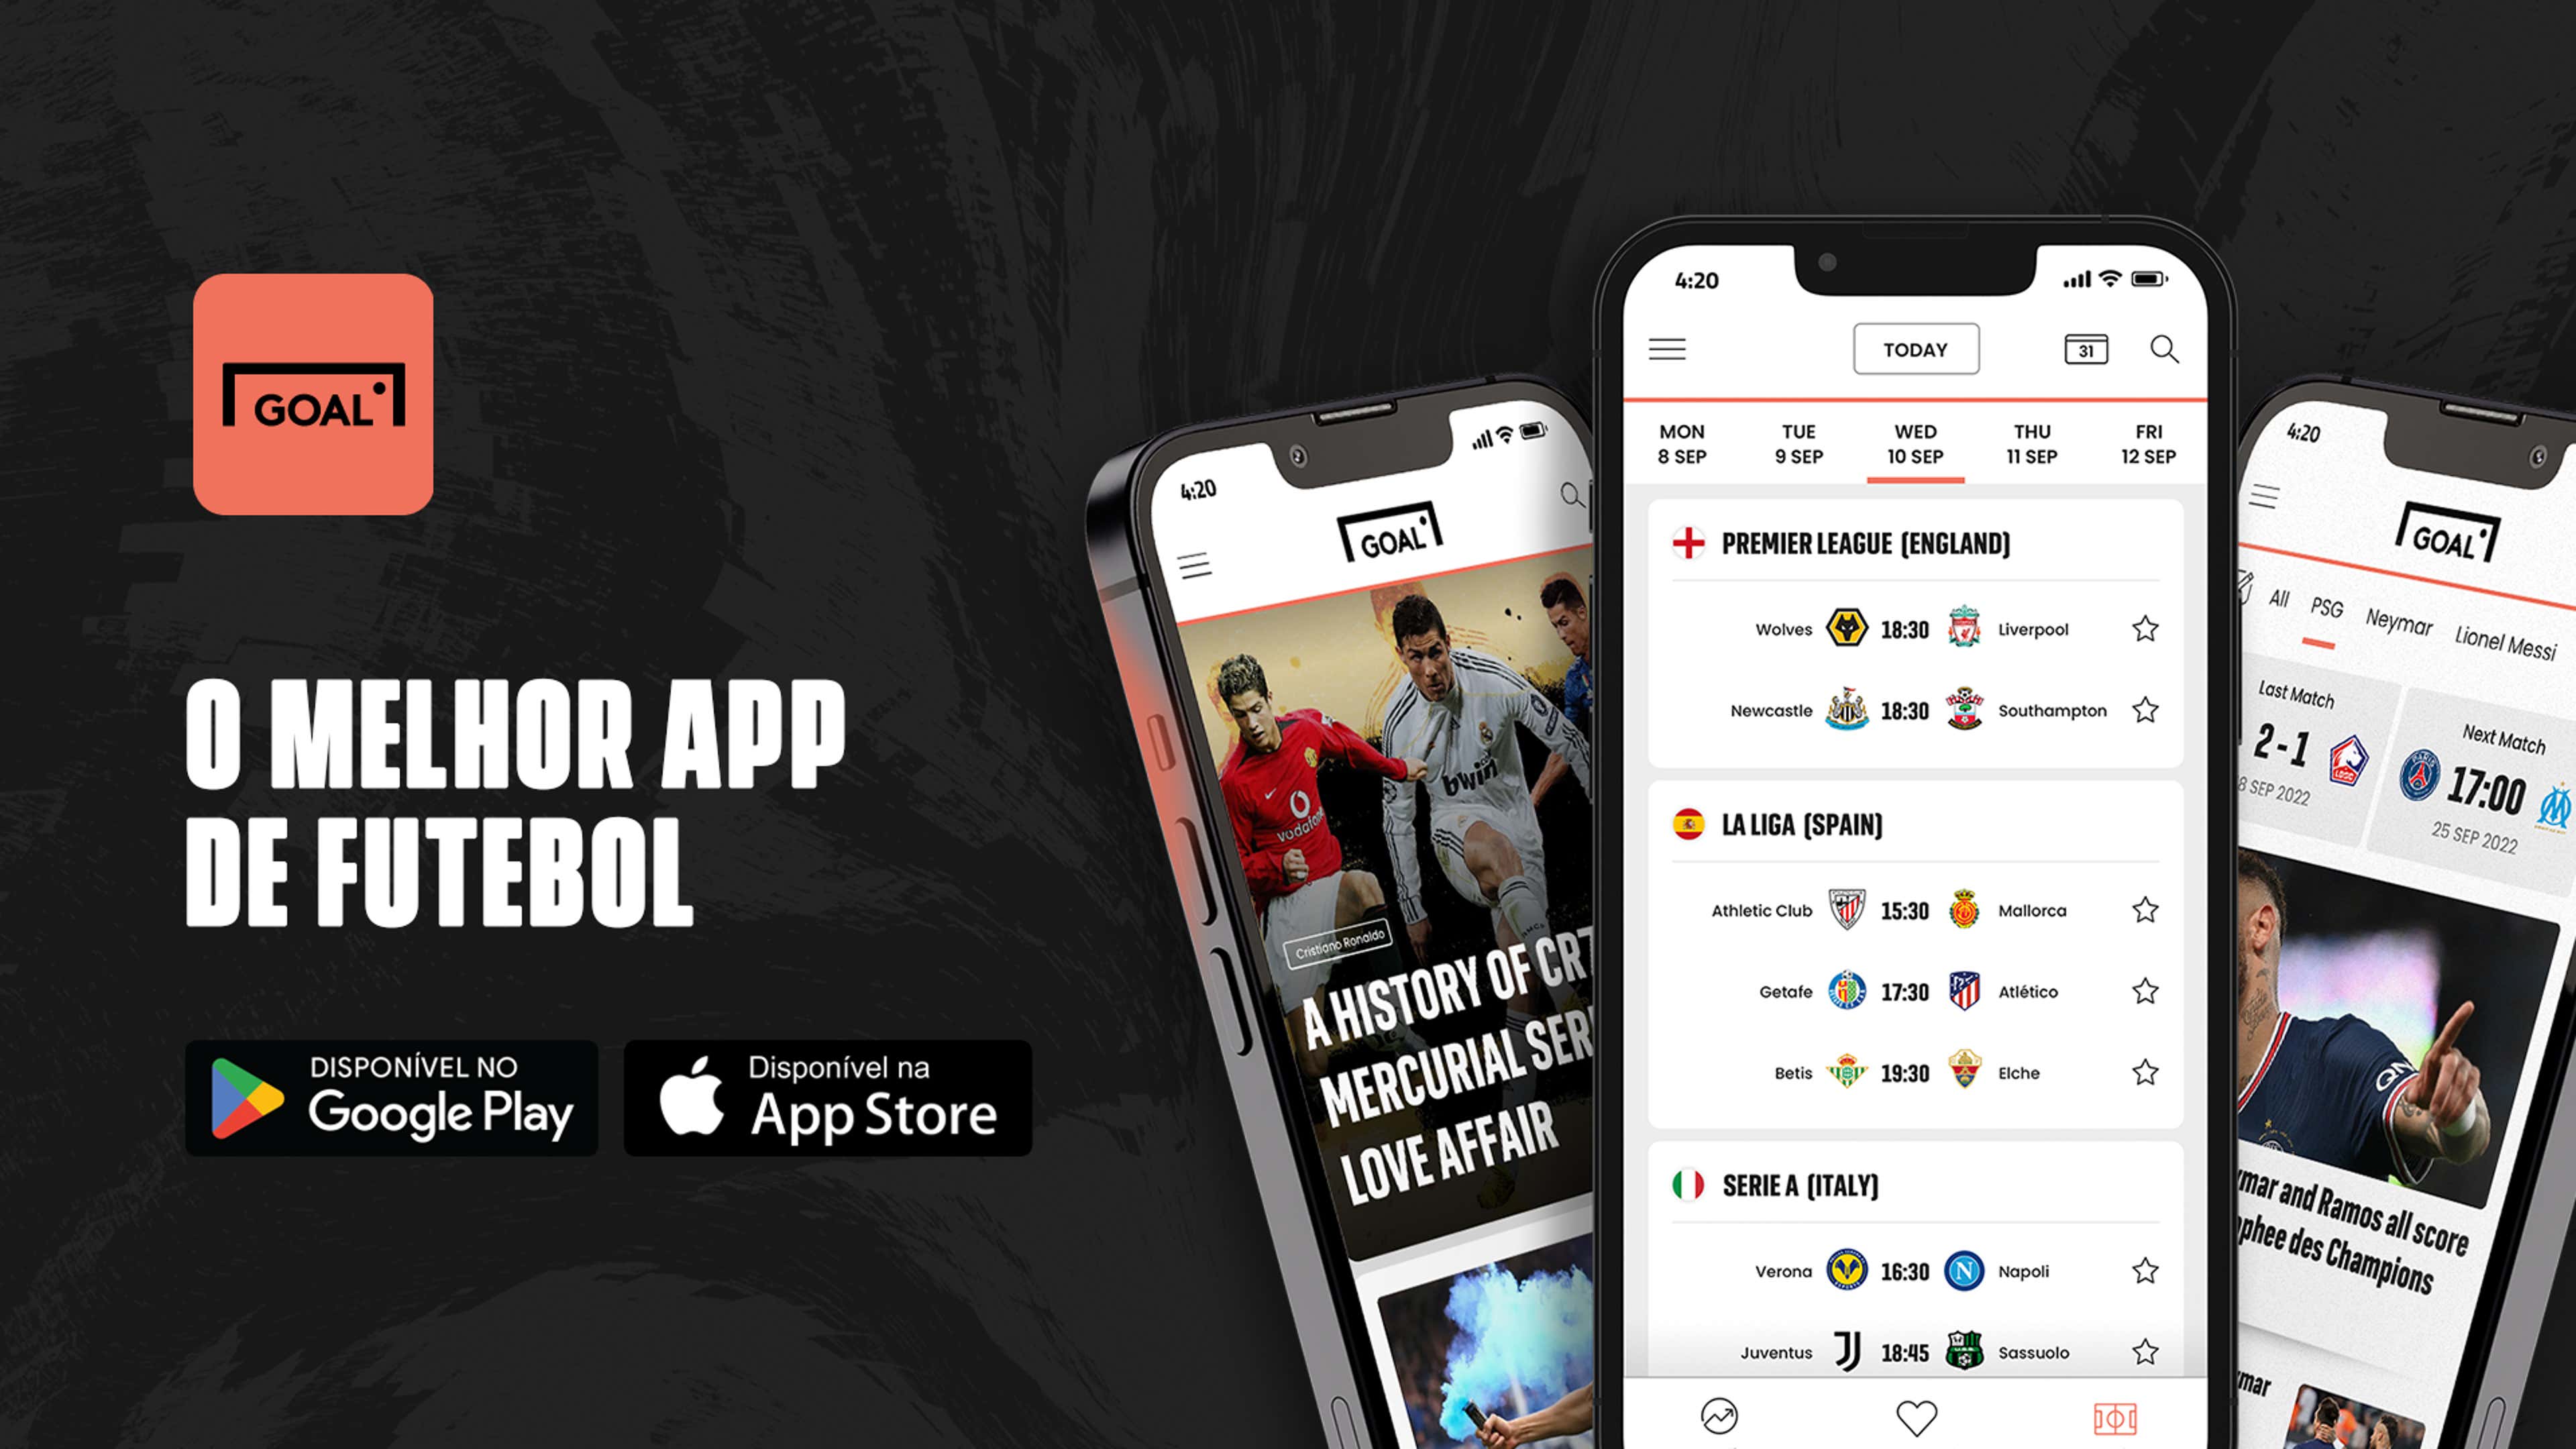 Futebol - AO VIVO - Apps on Google Play